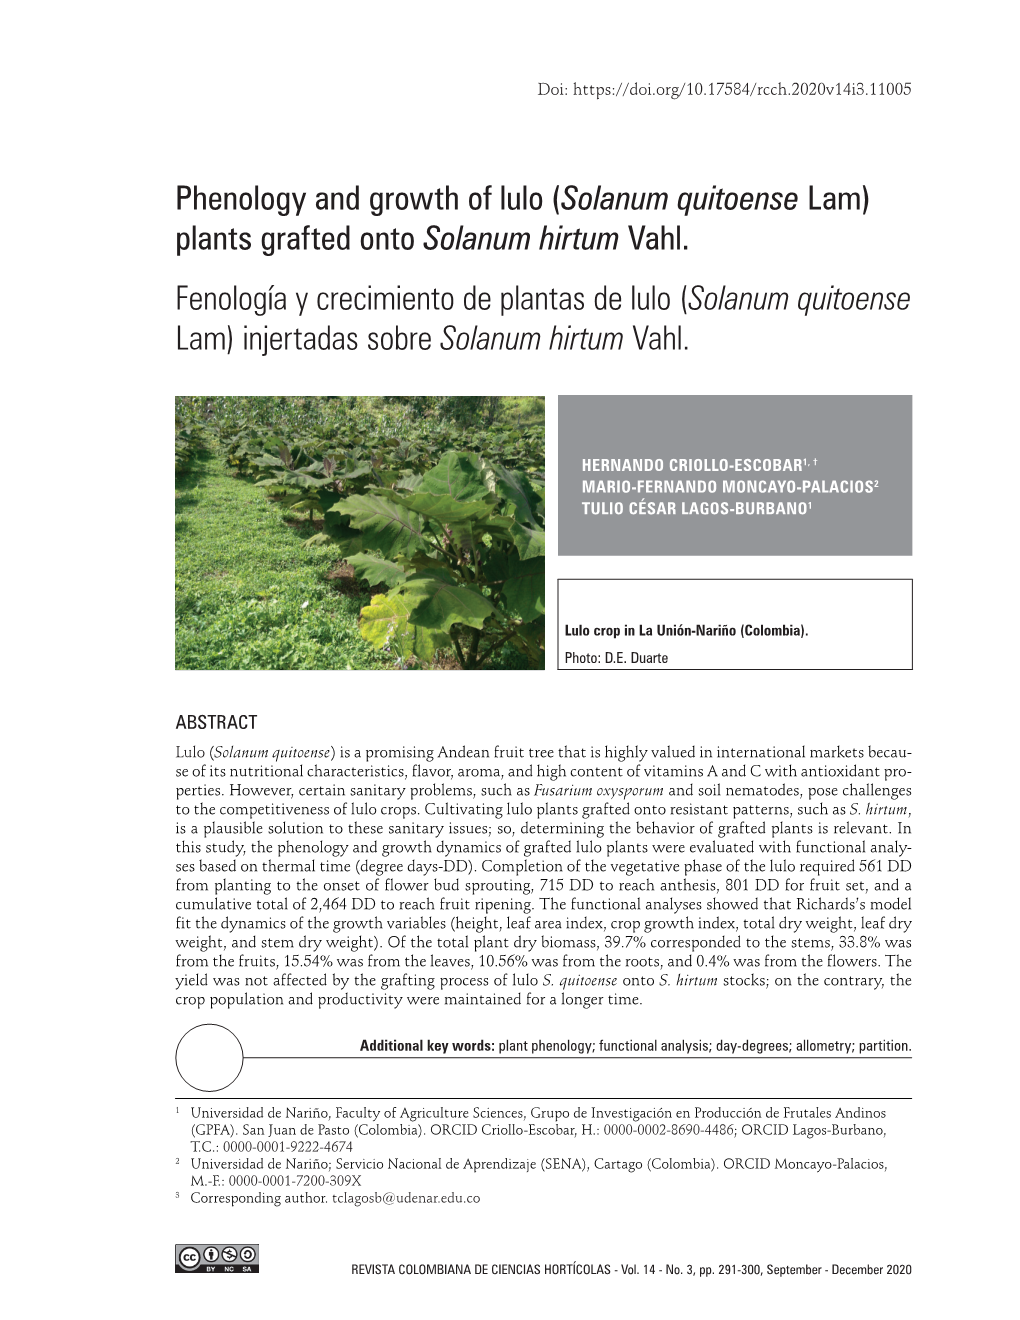 Phenology and Growth of Lulo (Solanum Quitoense Lam) Plants Grafted Onto Solanum Hirtum Vahl